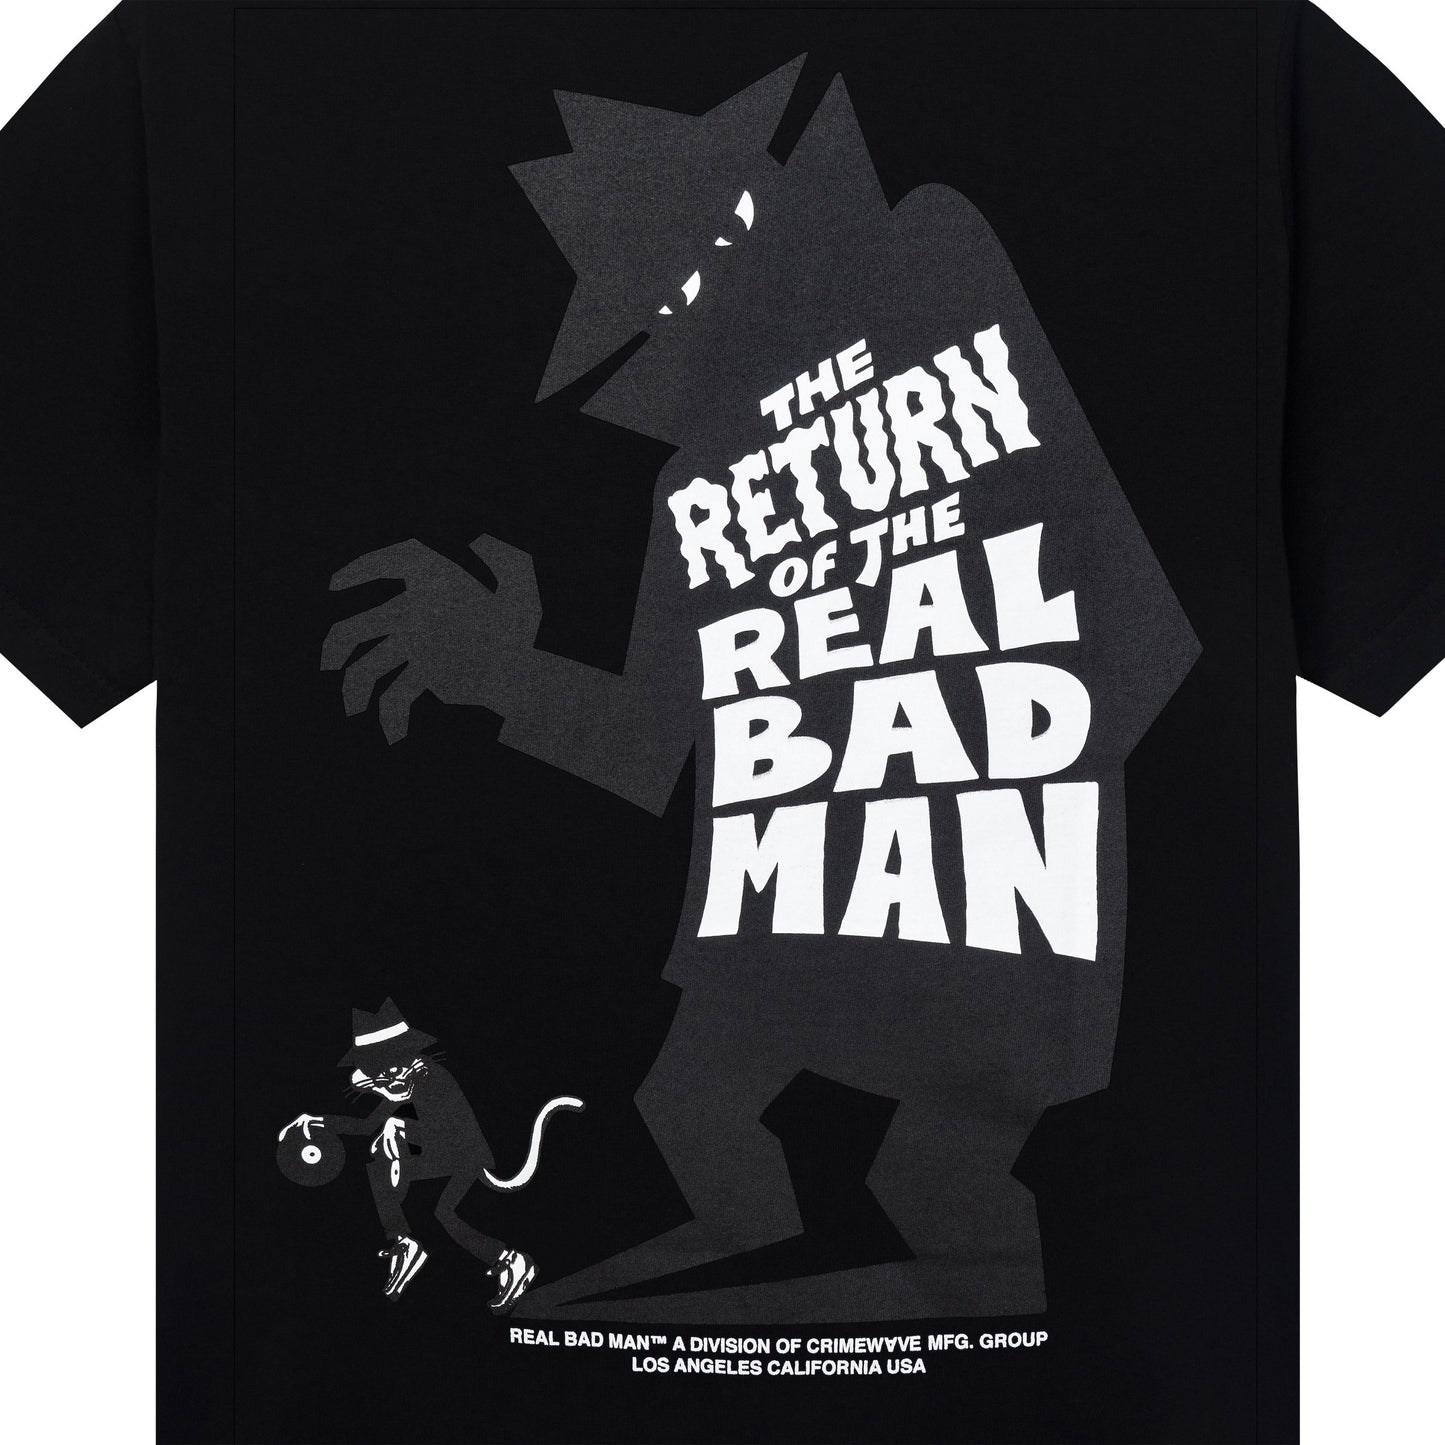 Real Bad Man Return Of The RBM T-Shirt Black